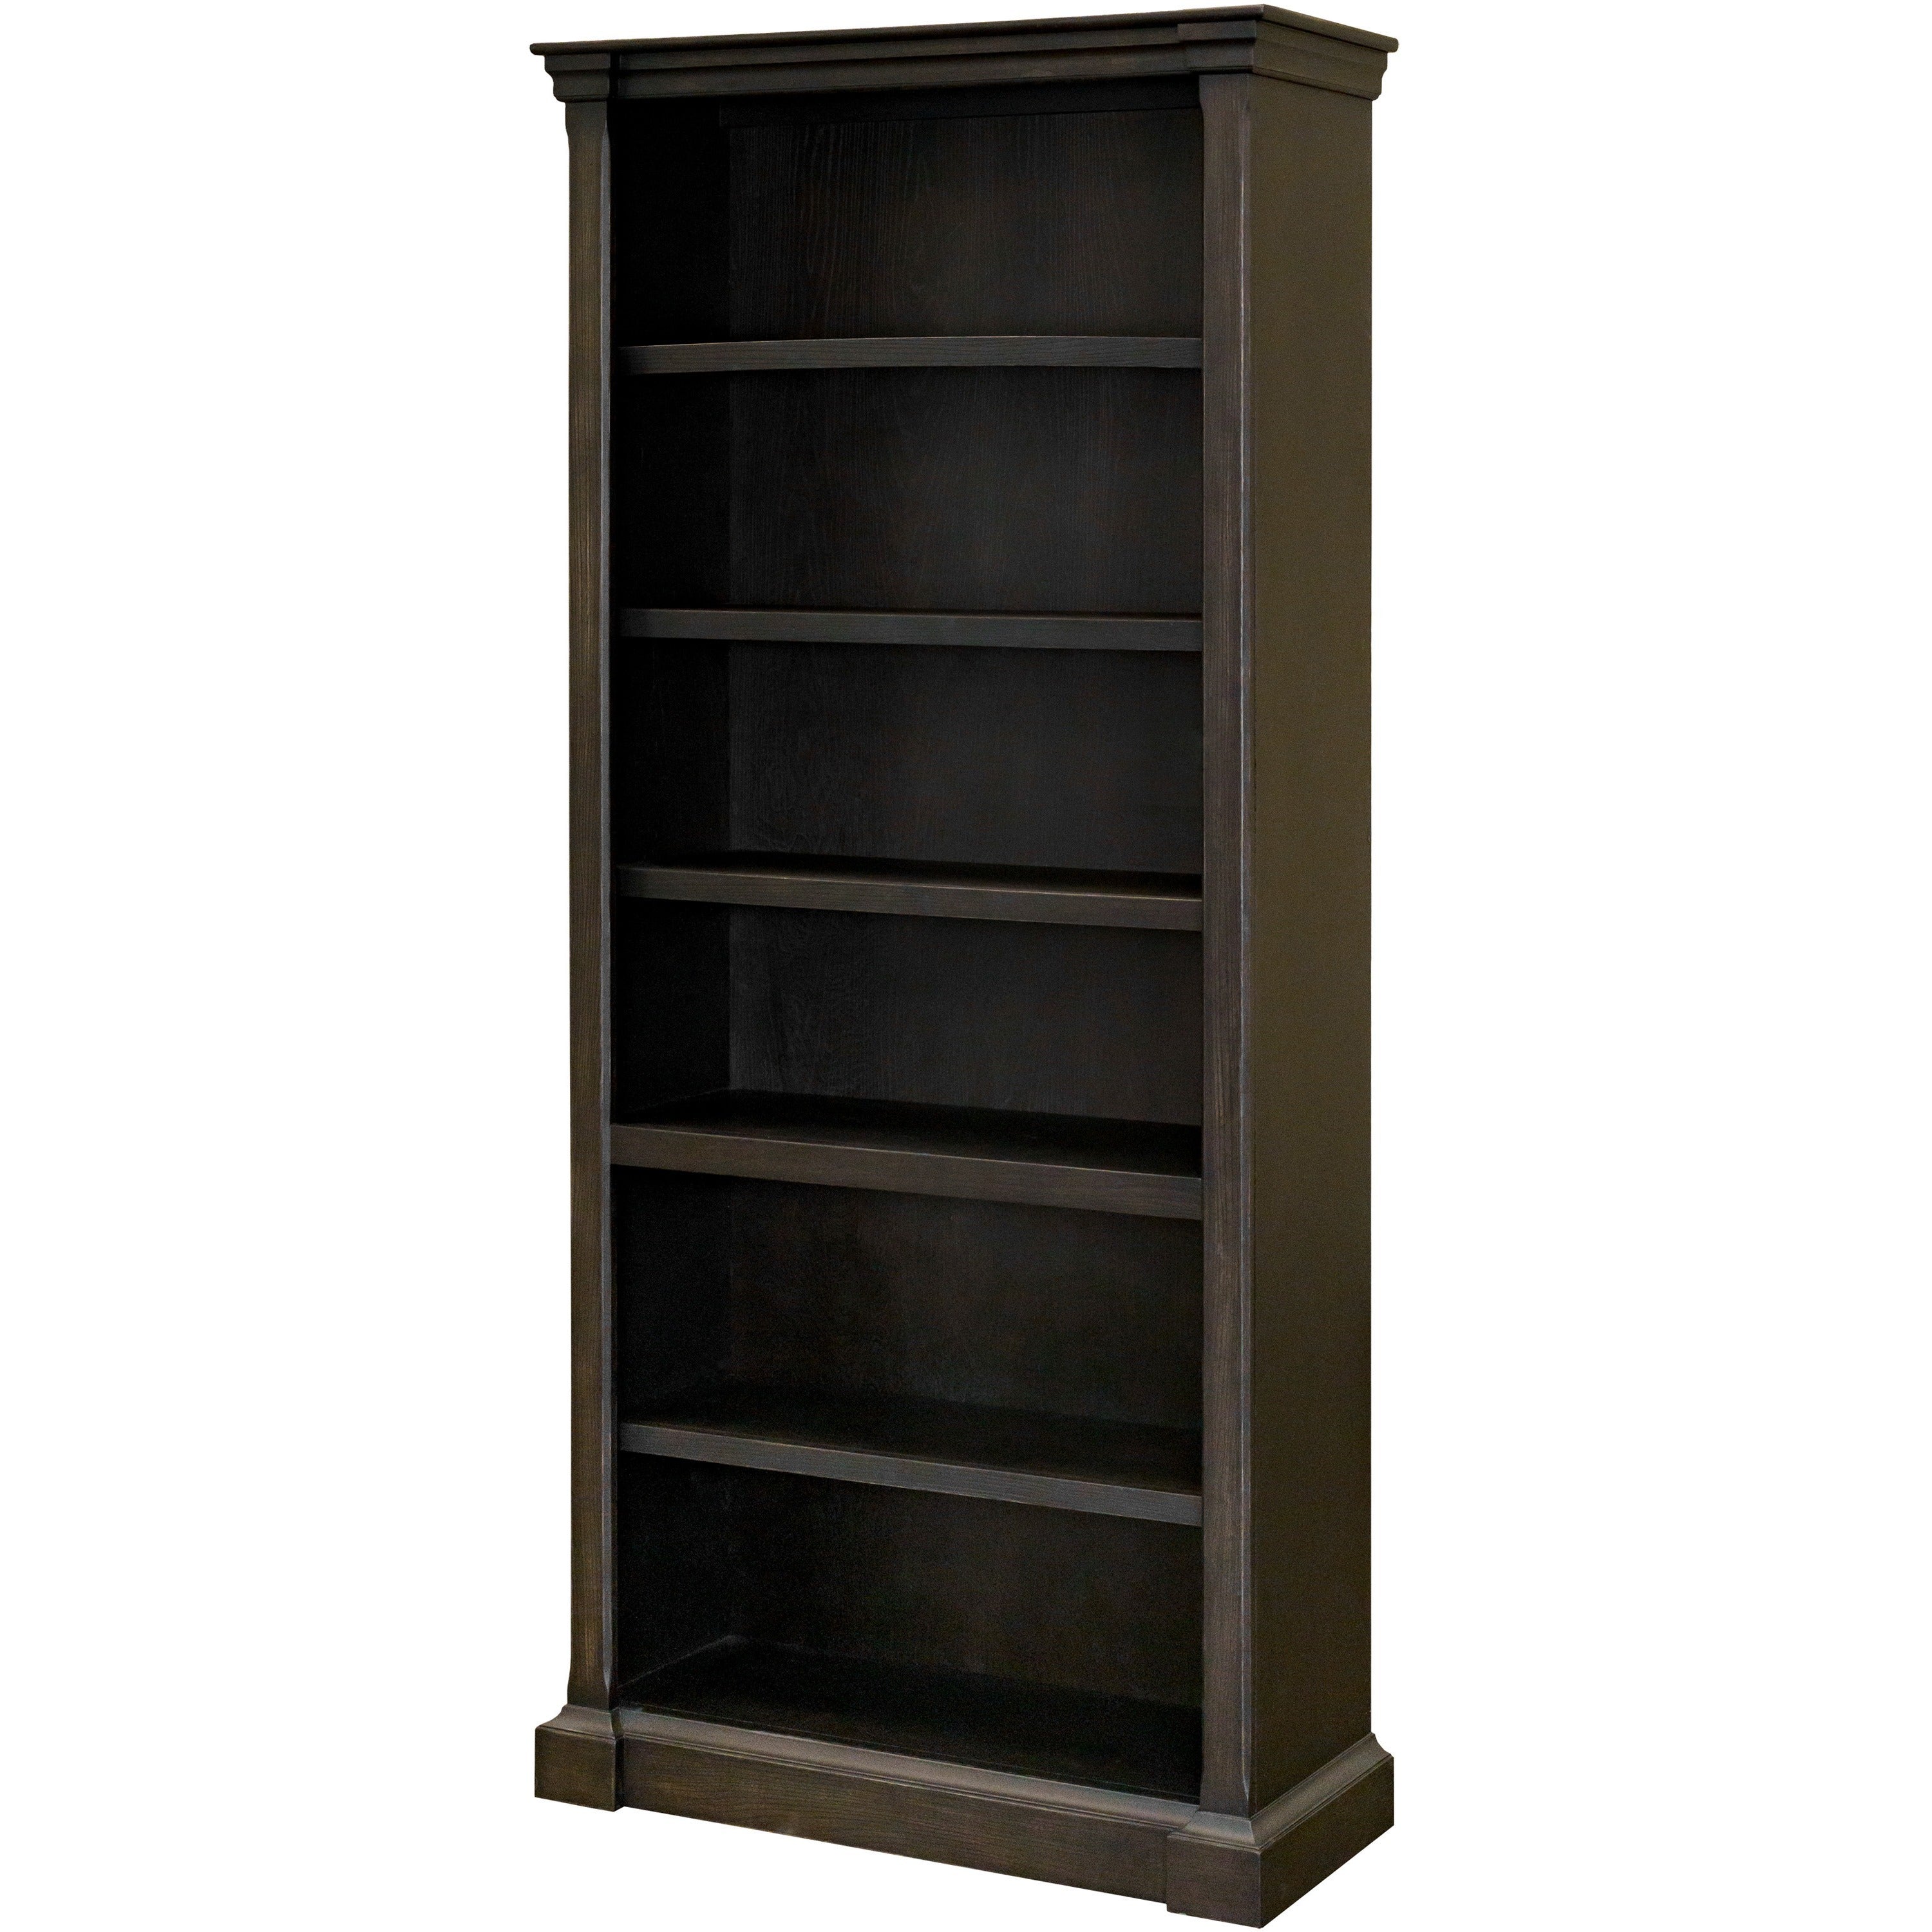 martin-kingston-office-desking-unit-38-x-1478-5-shelves-4-adjustable-shelfves-material-wood-finish-dark-chocolate-rub-through_mrtimkn3678 - 3